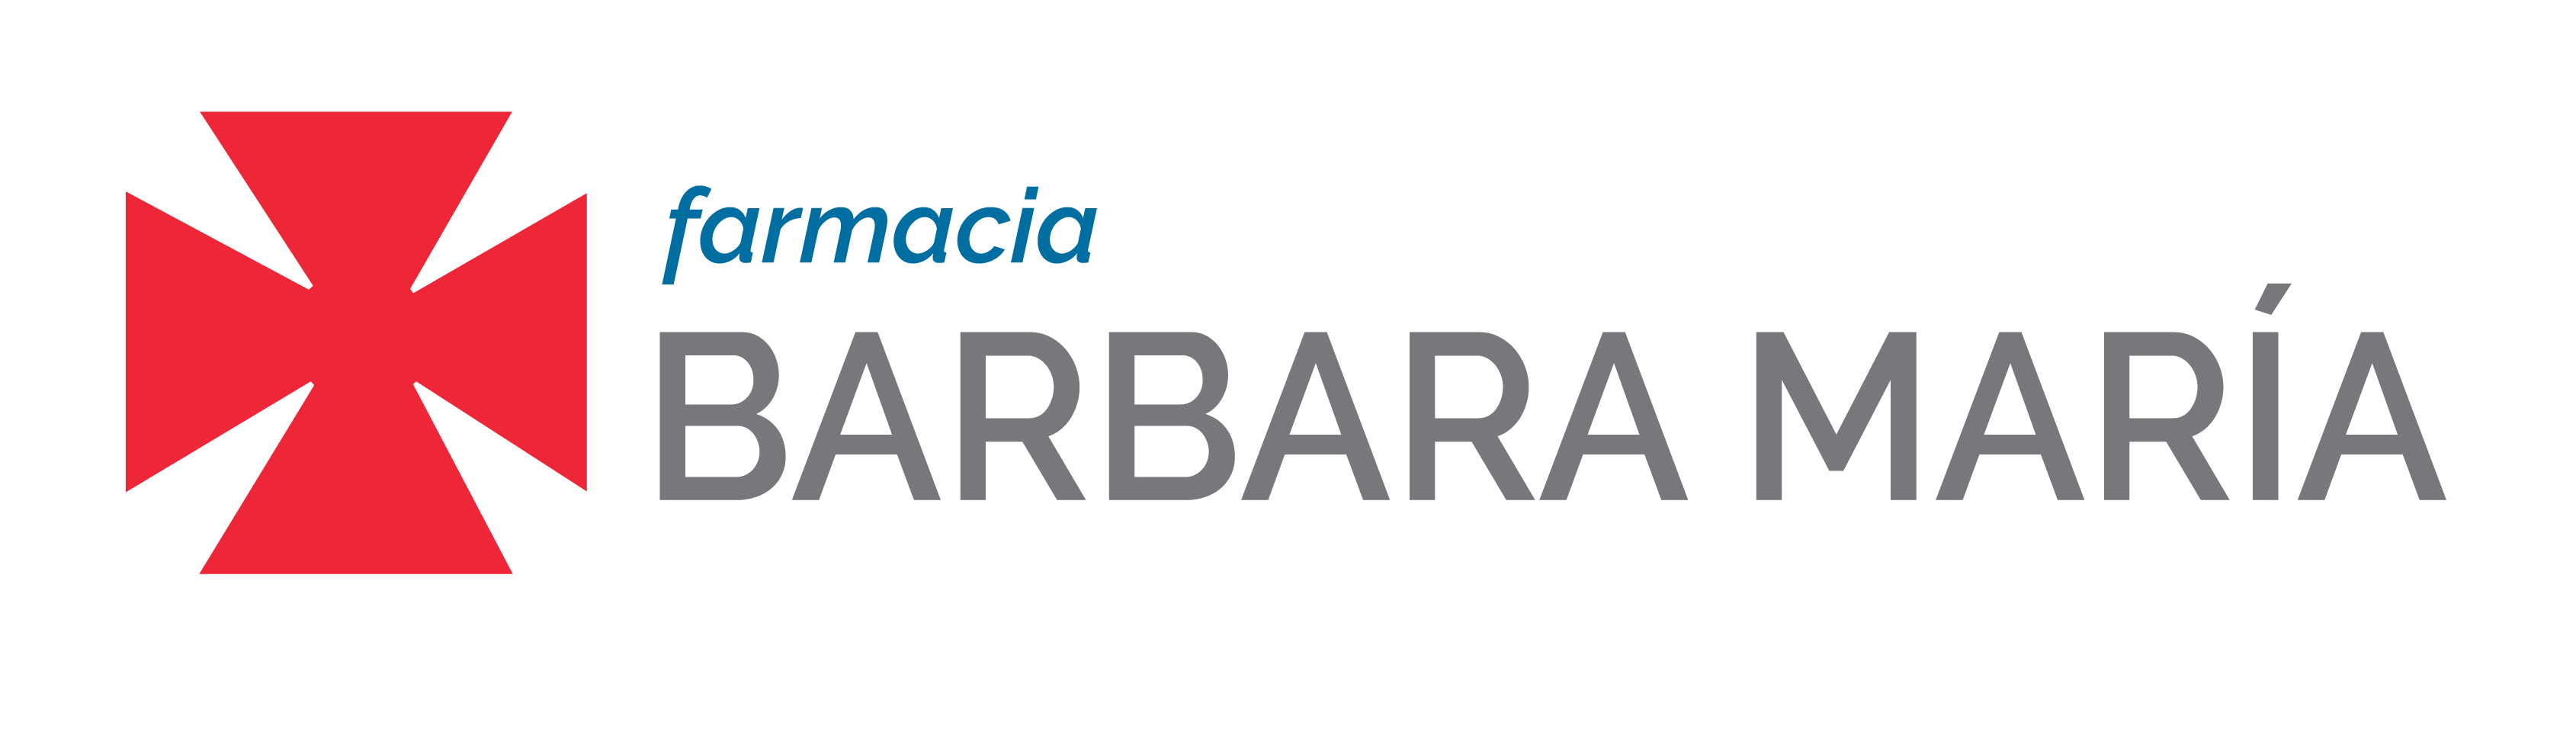 Farmacia en Boca Chica – Farmacia Barbara María